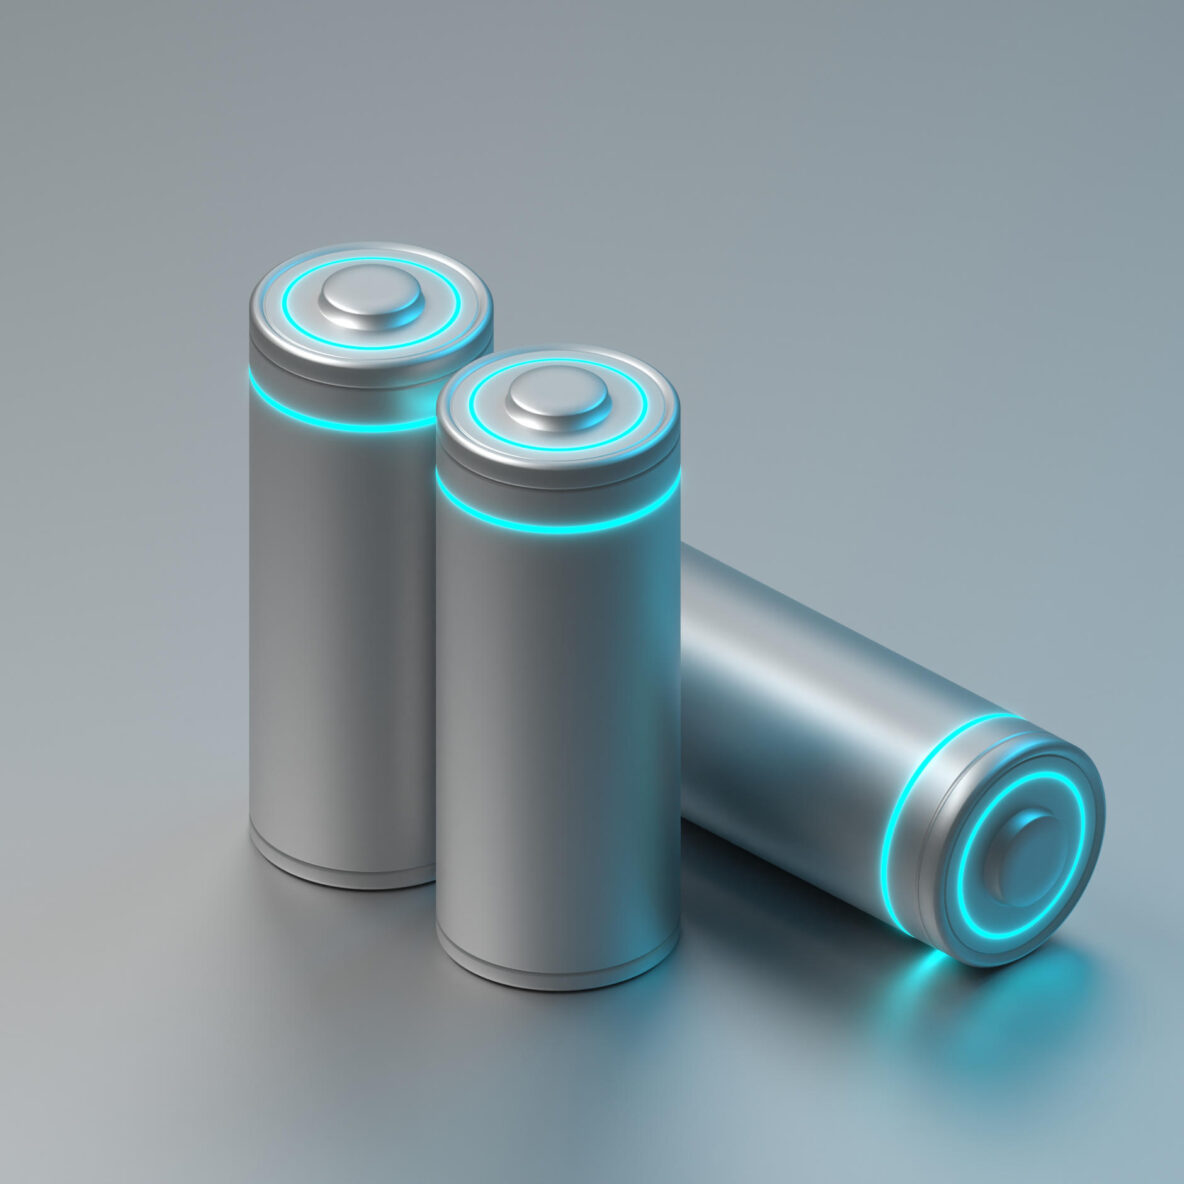 Litium Iron Batteries - IMD Business School